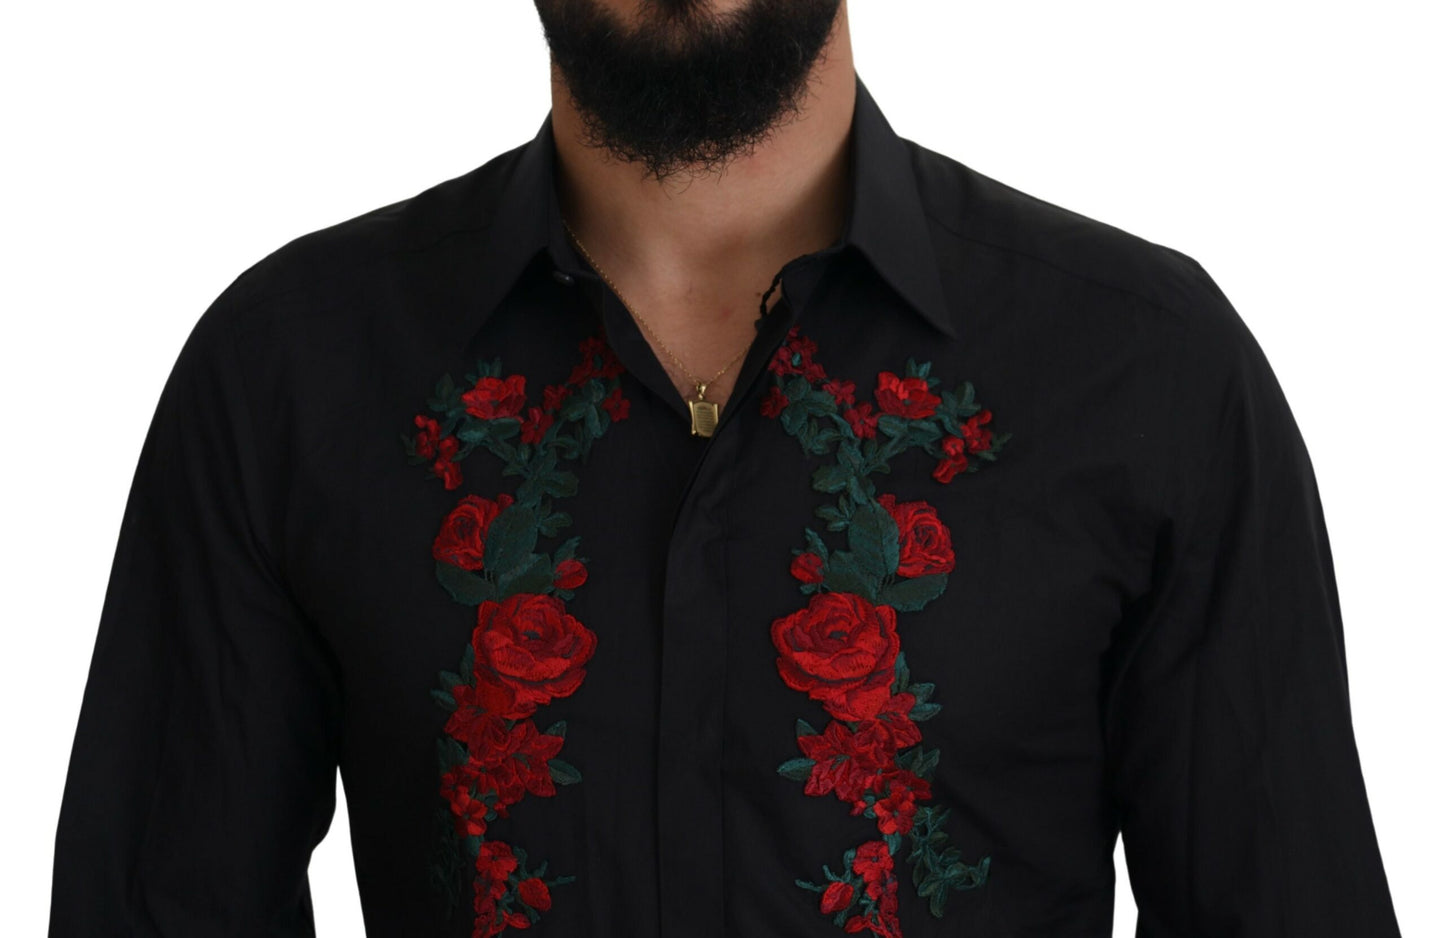 Elegant Floral Embroidered Cotton Shirt